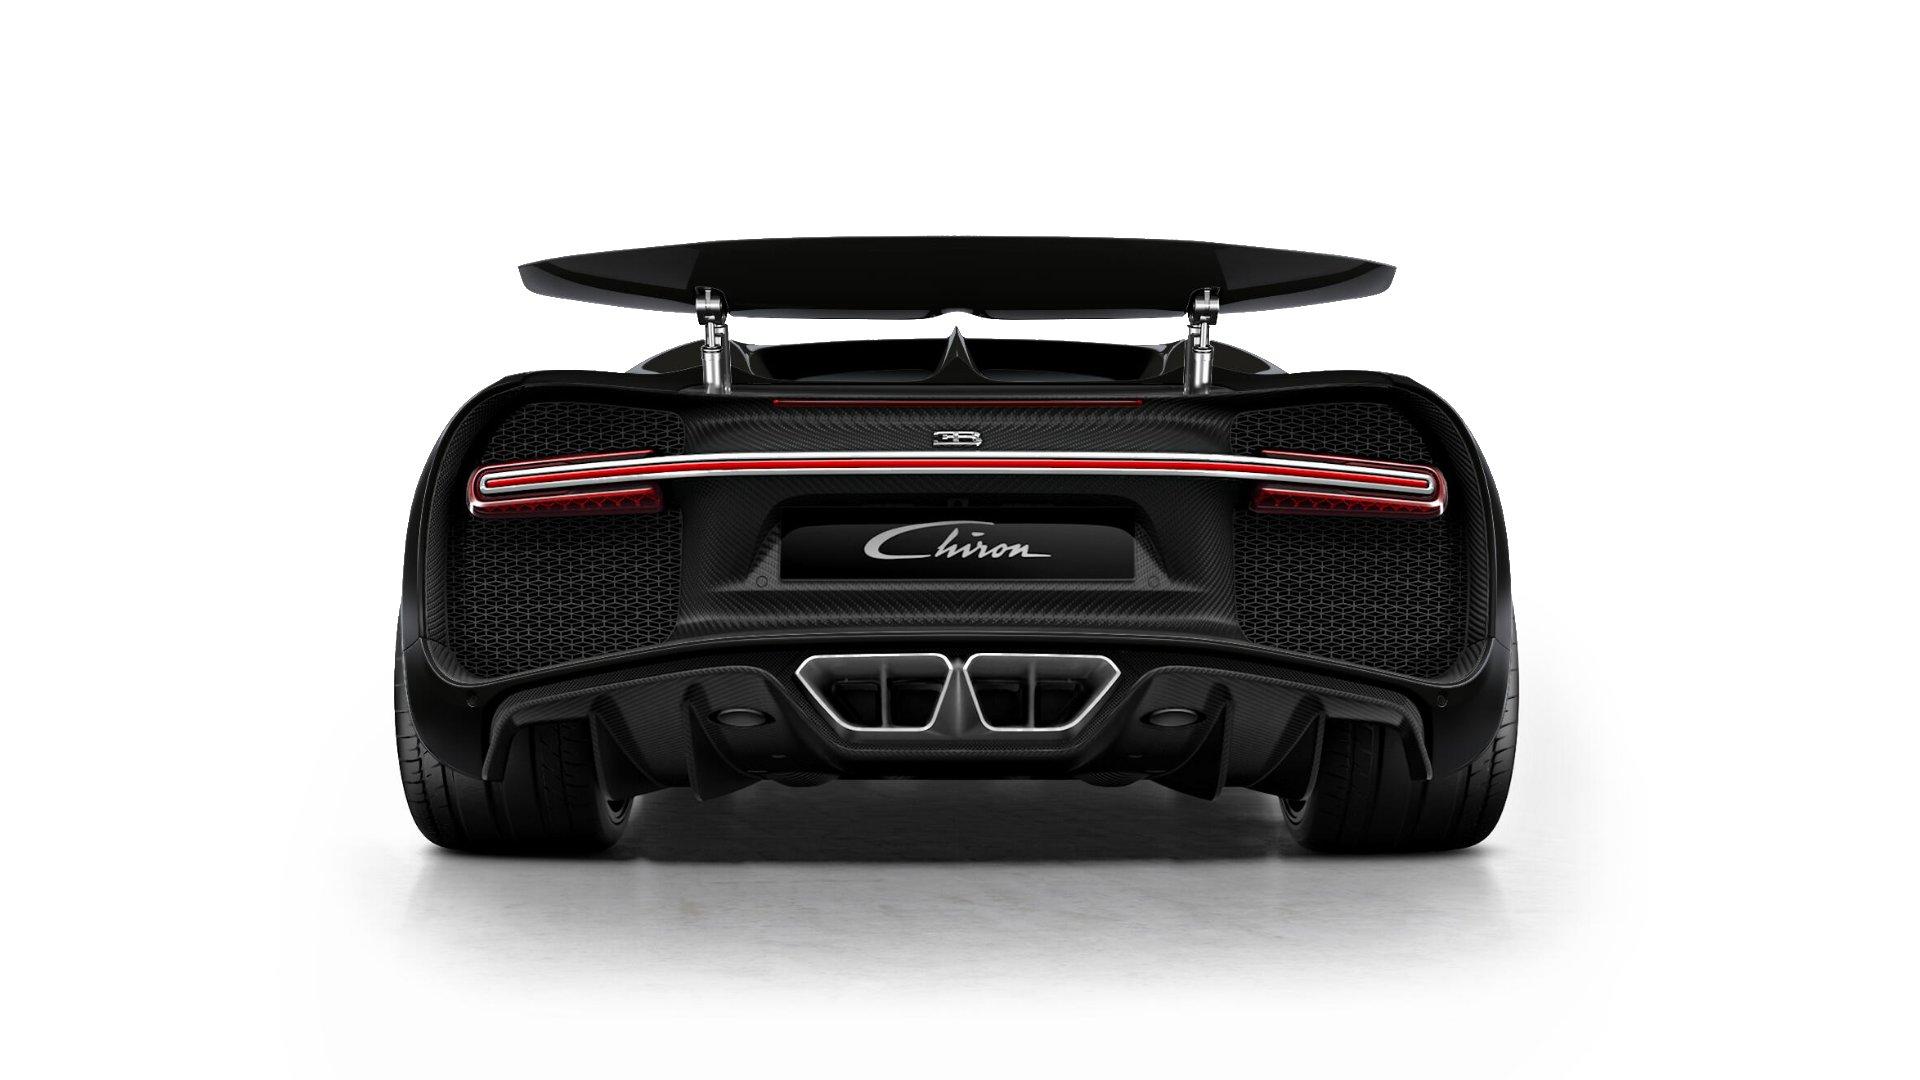 Bugatti Chiron luxurious super sports car